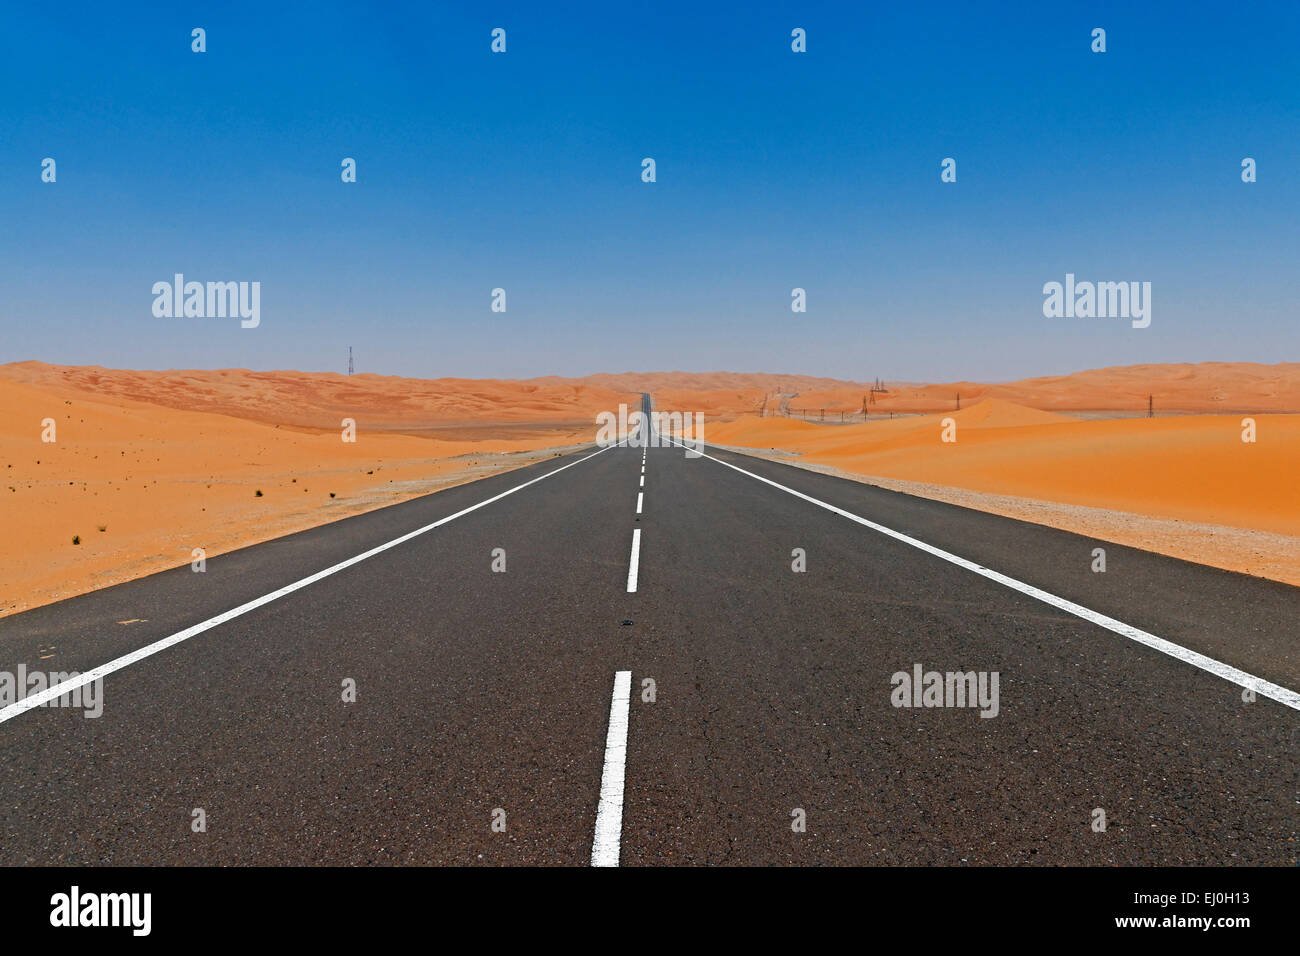 Asia, United Arab Emirates, UAE, Abu Dhabi, Arada, Liwa, Arada Road, desert, sand dunes, mountains, sand, desert, panorama, scene Stock Photo